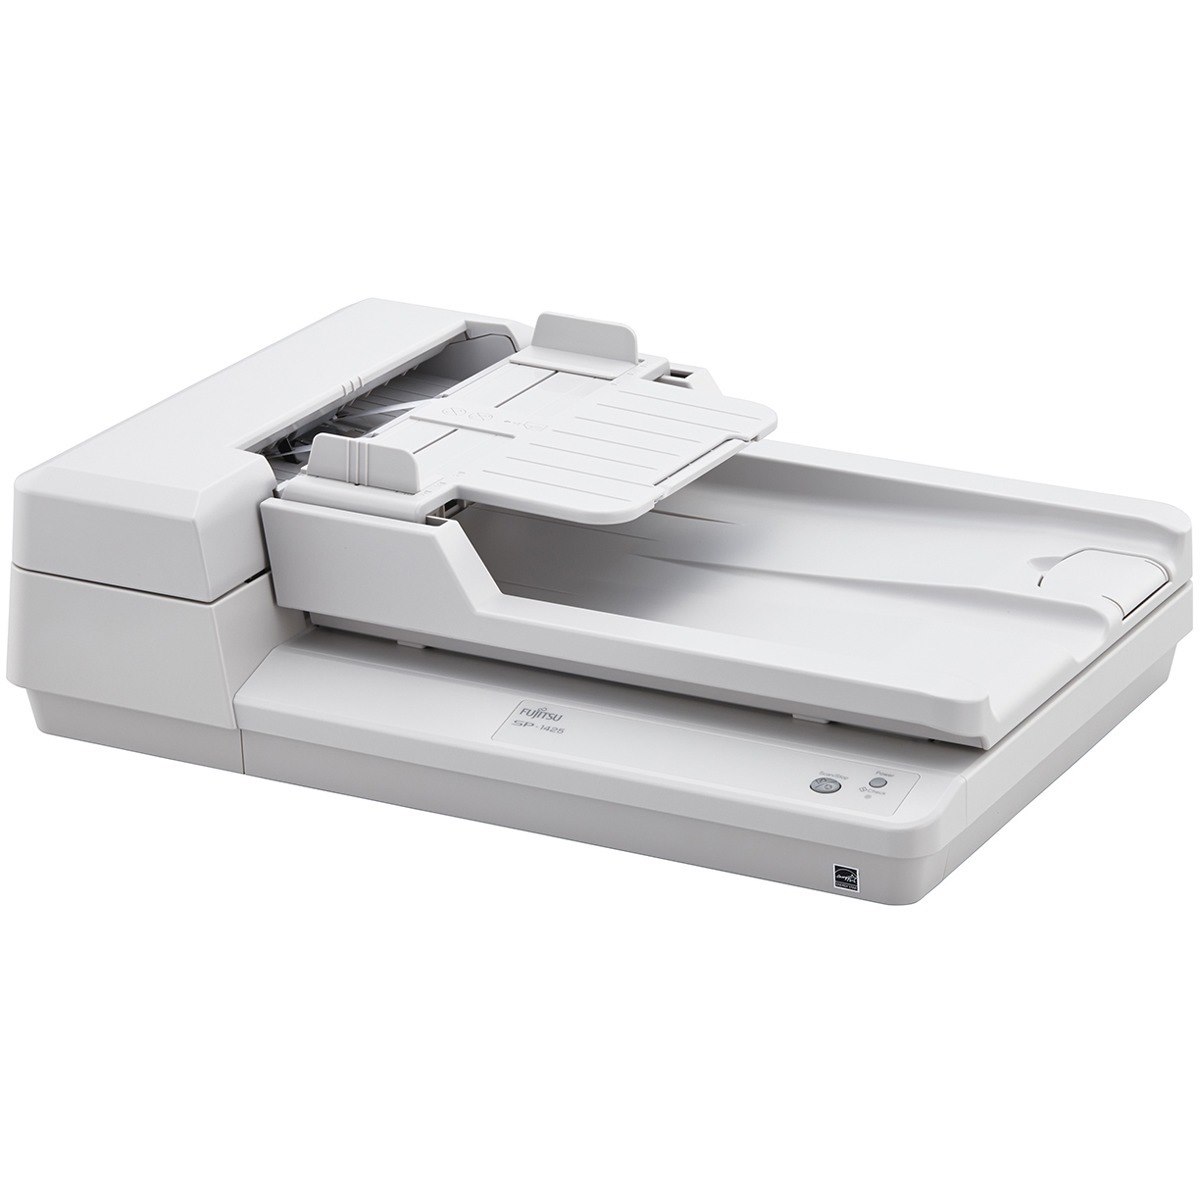 Fujitsu SP-1425 Flatbed Scanner - 600 dpi Optical